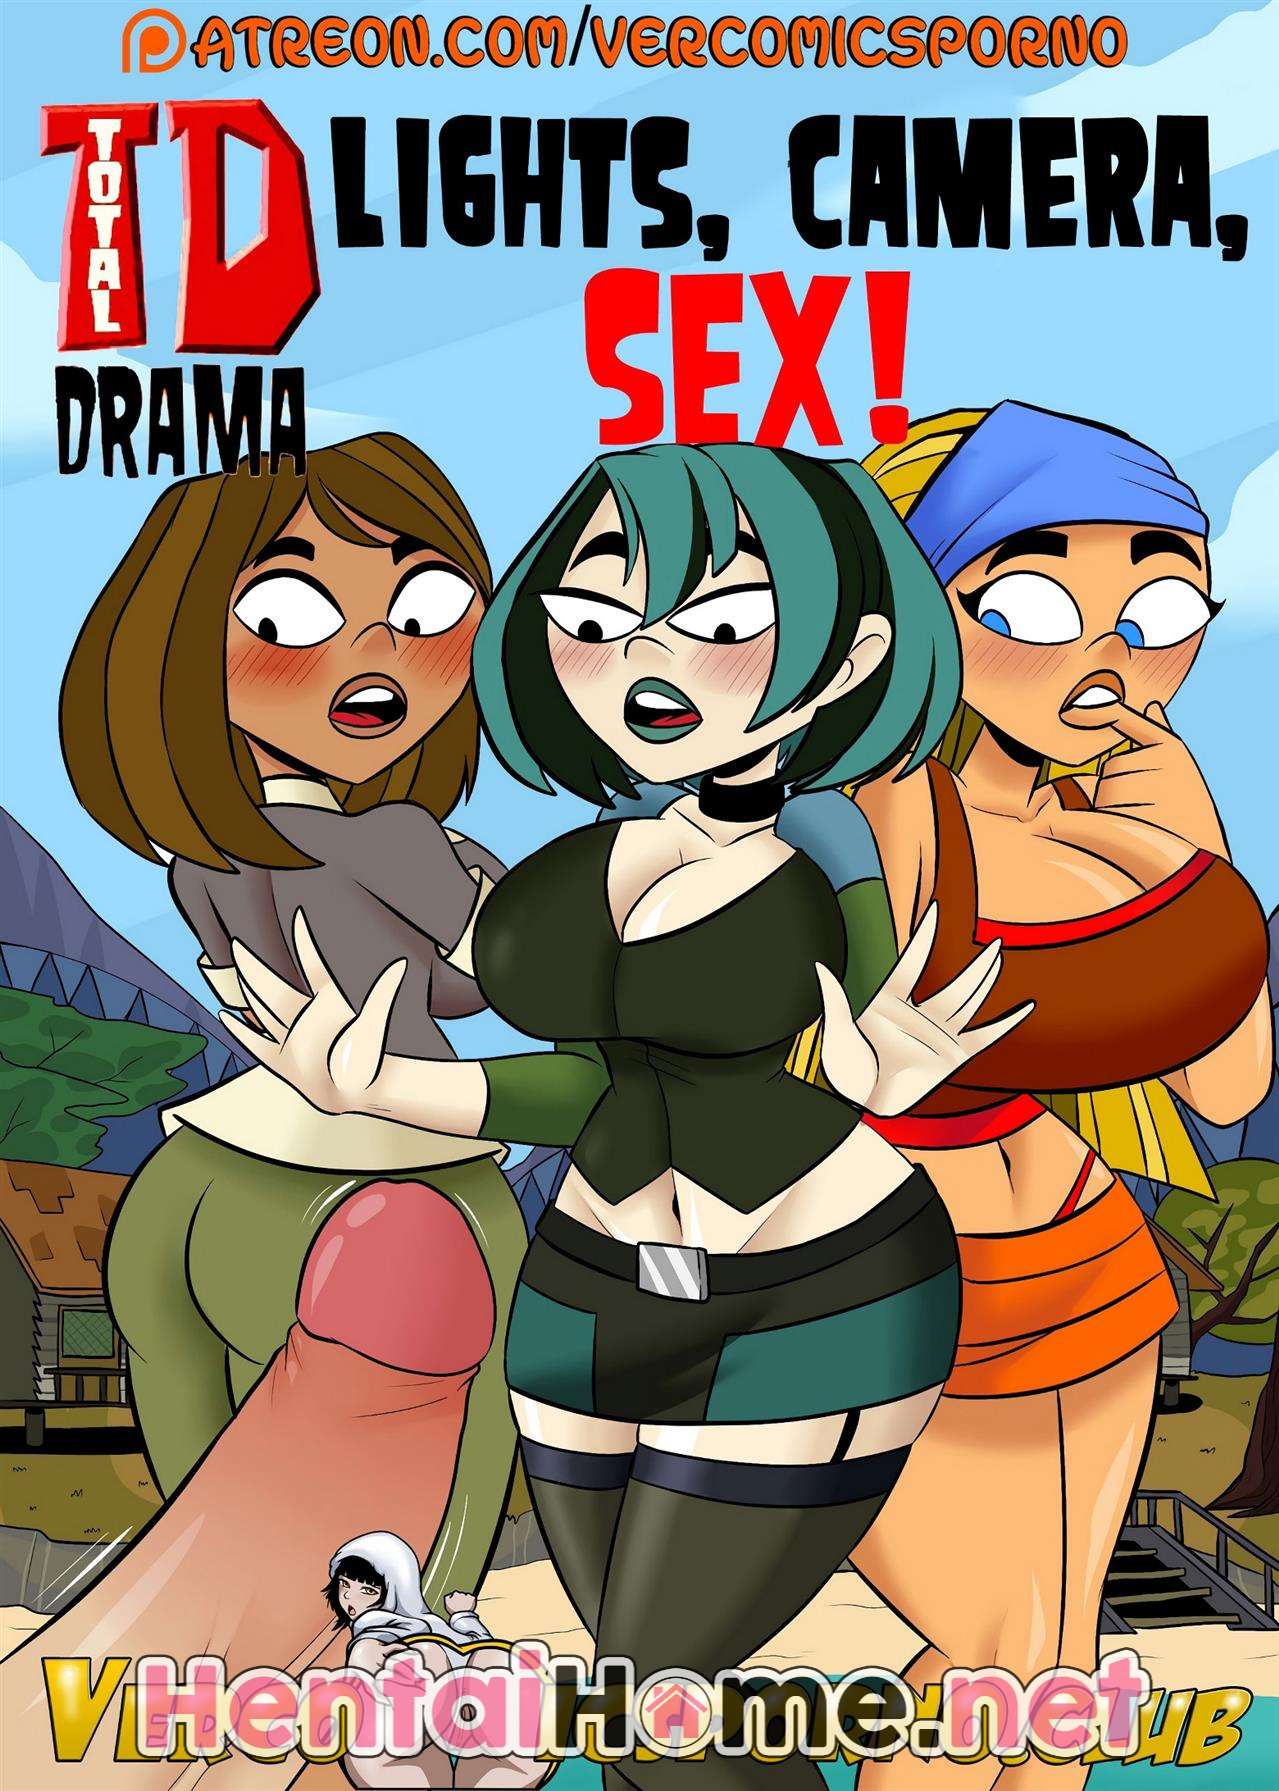 Hq de sexo cartoon